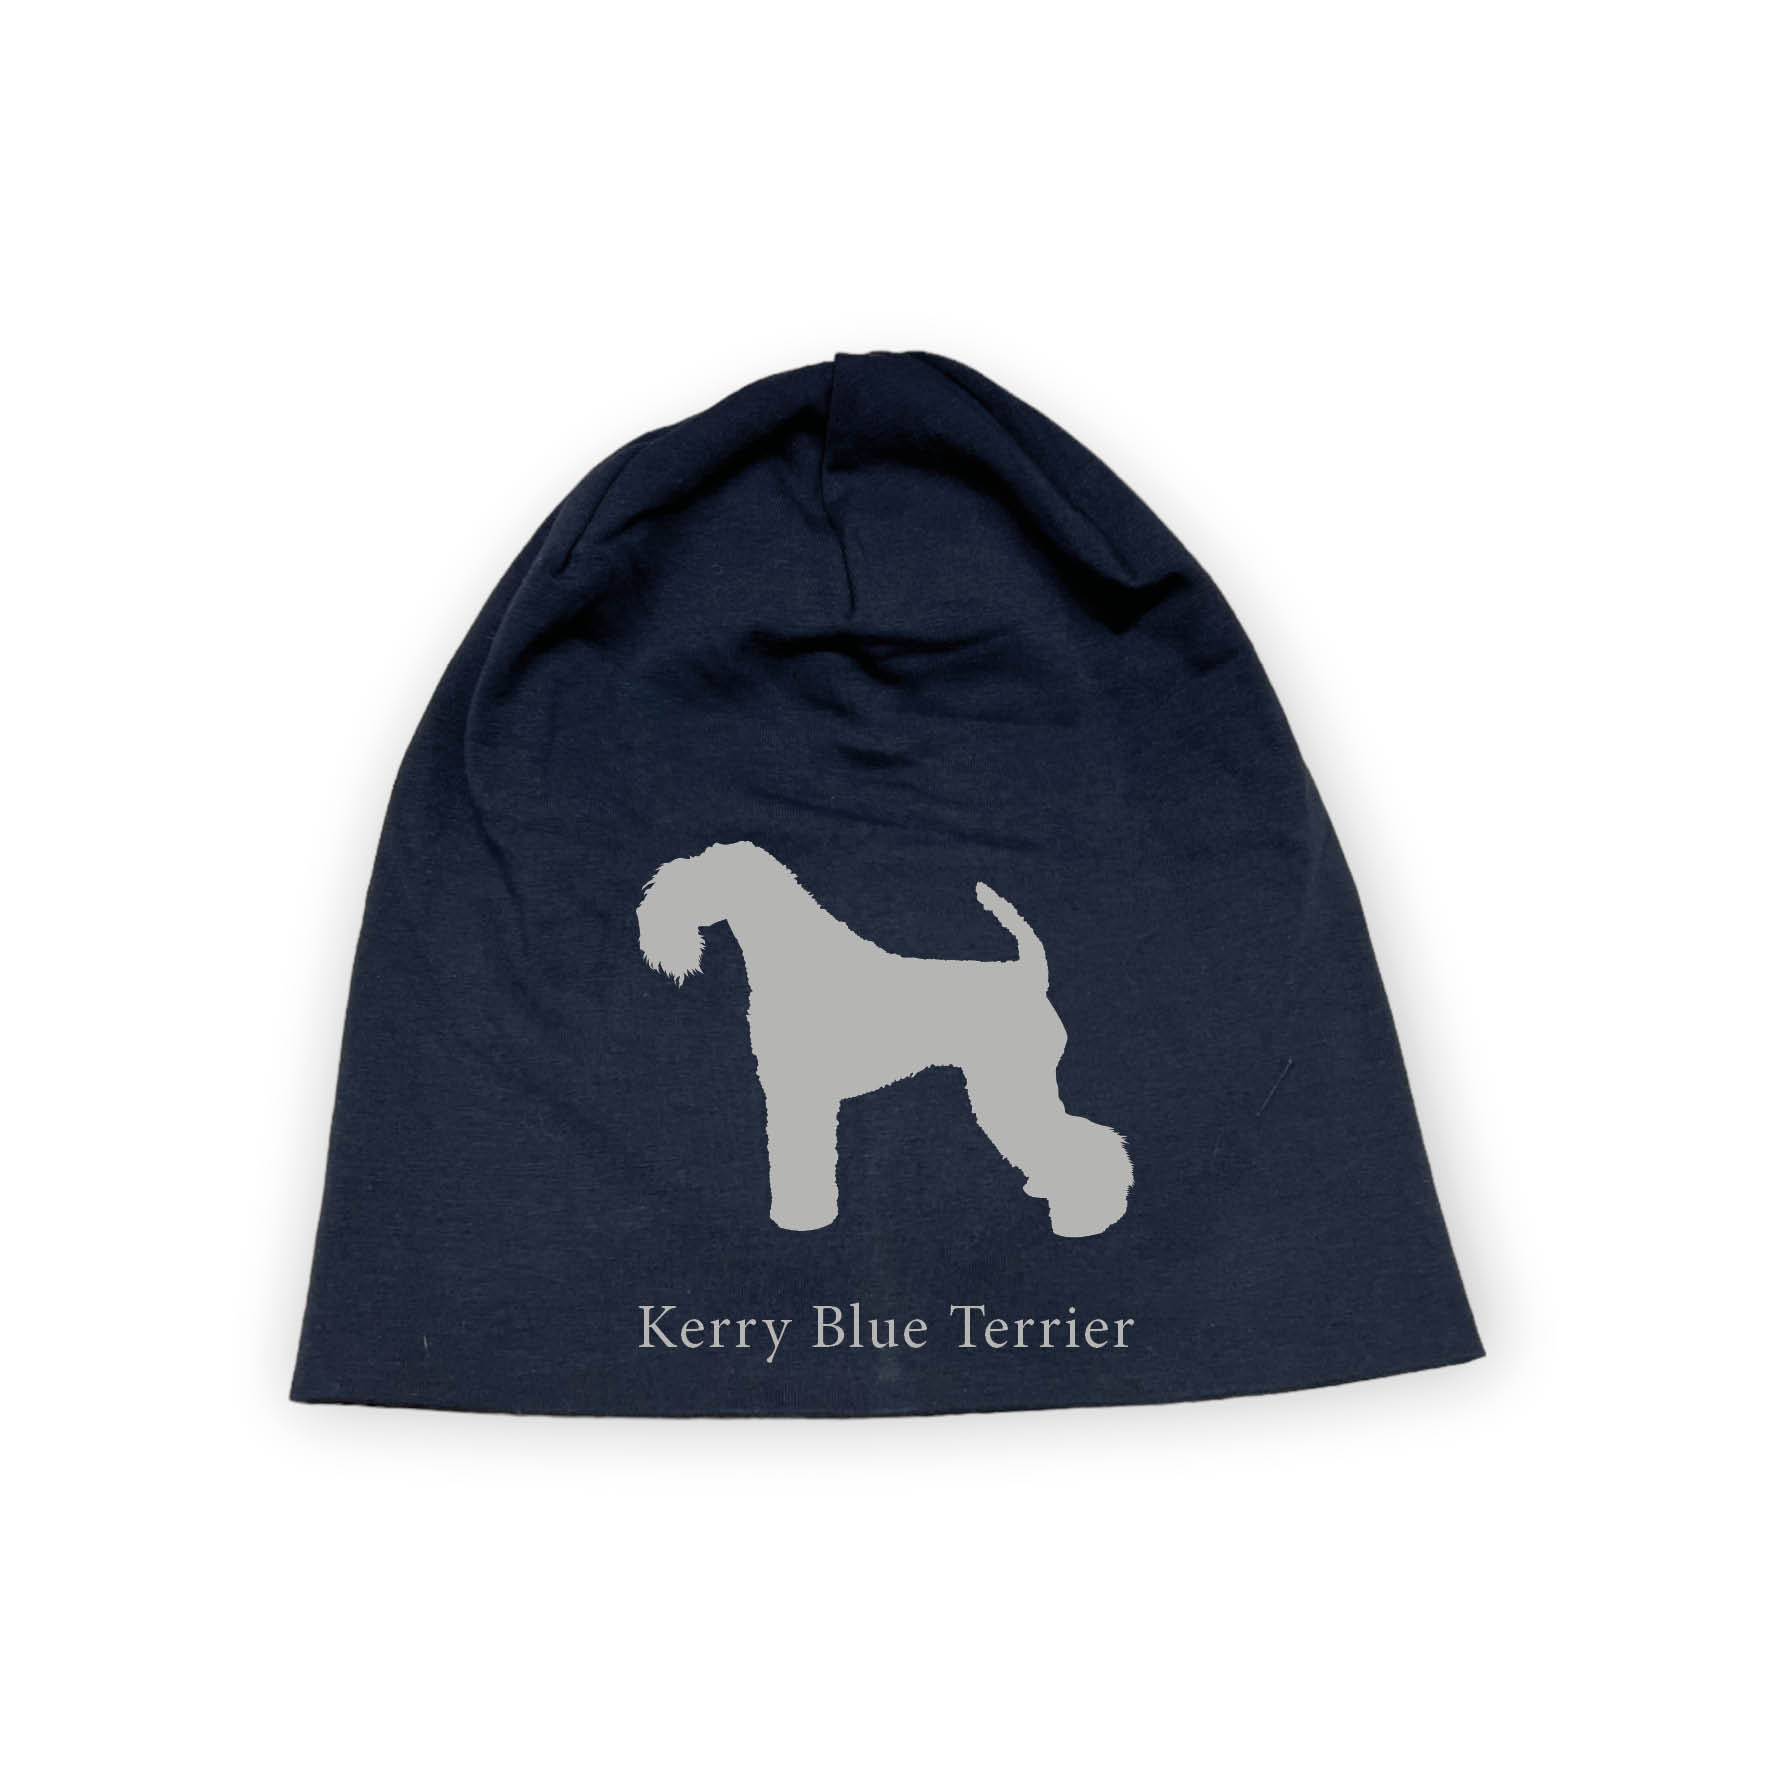 Bomulls mössa - Kerry Blue Terrier